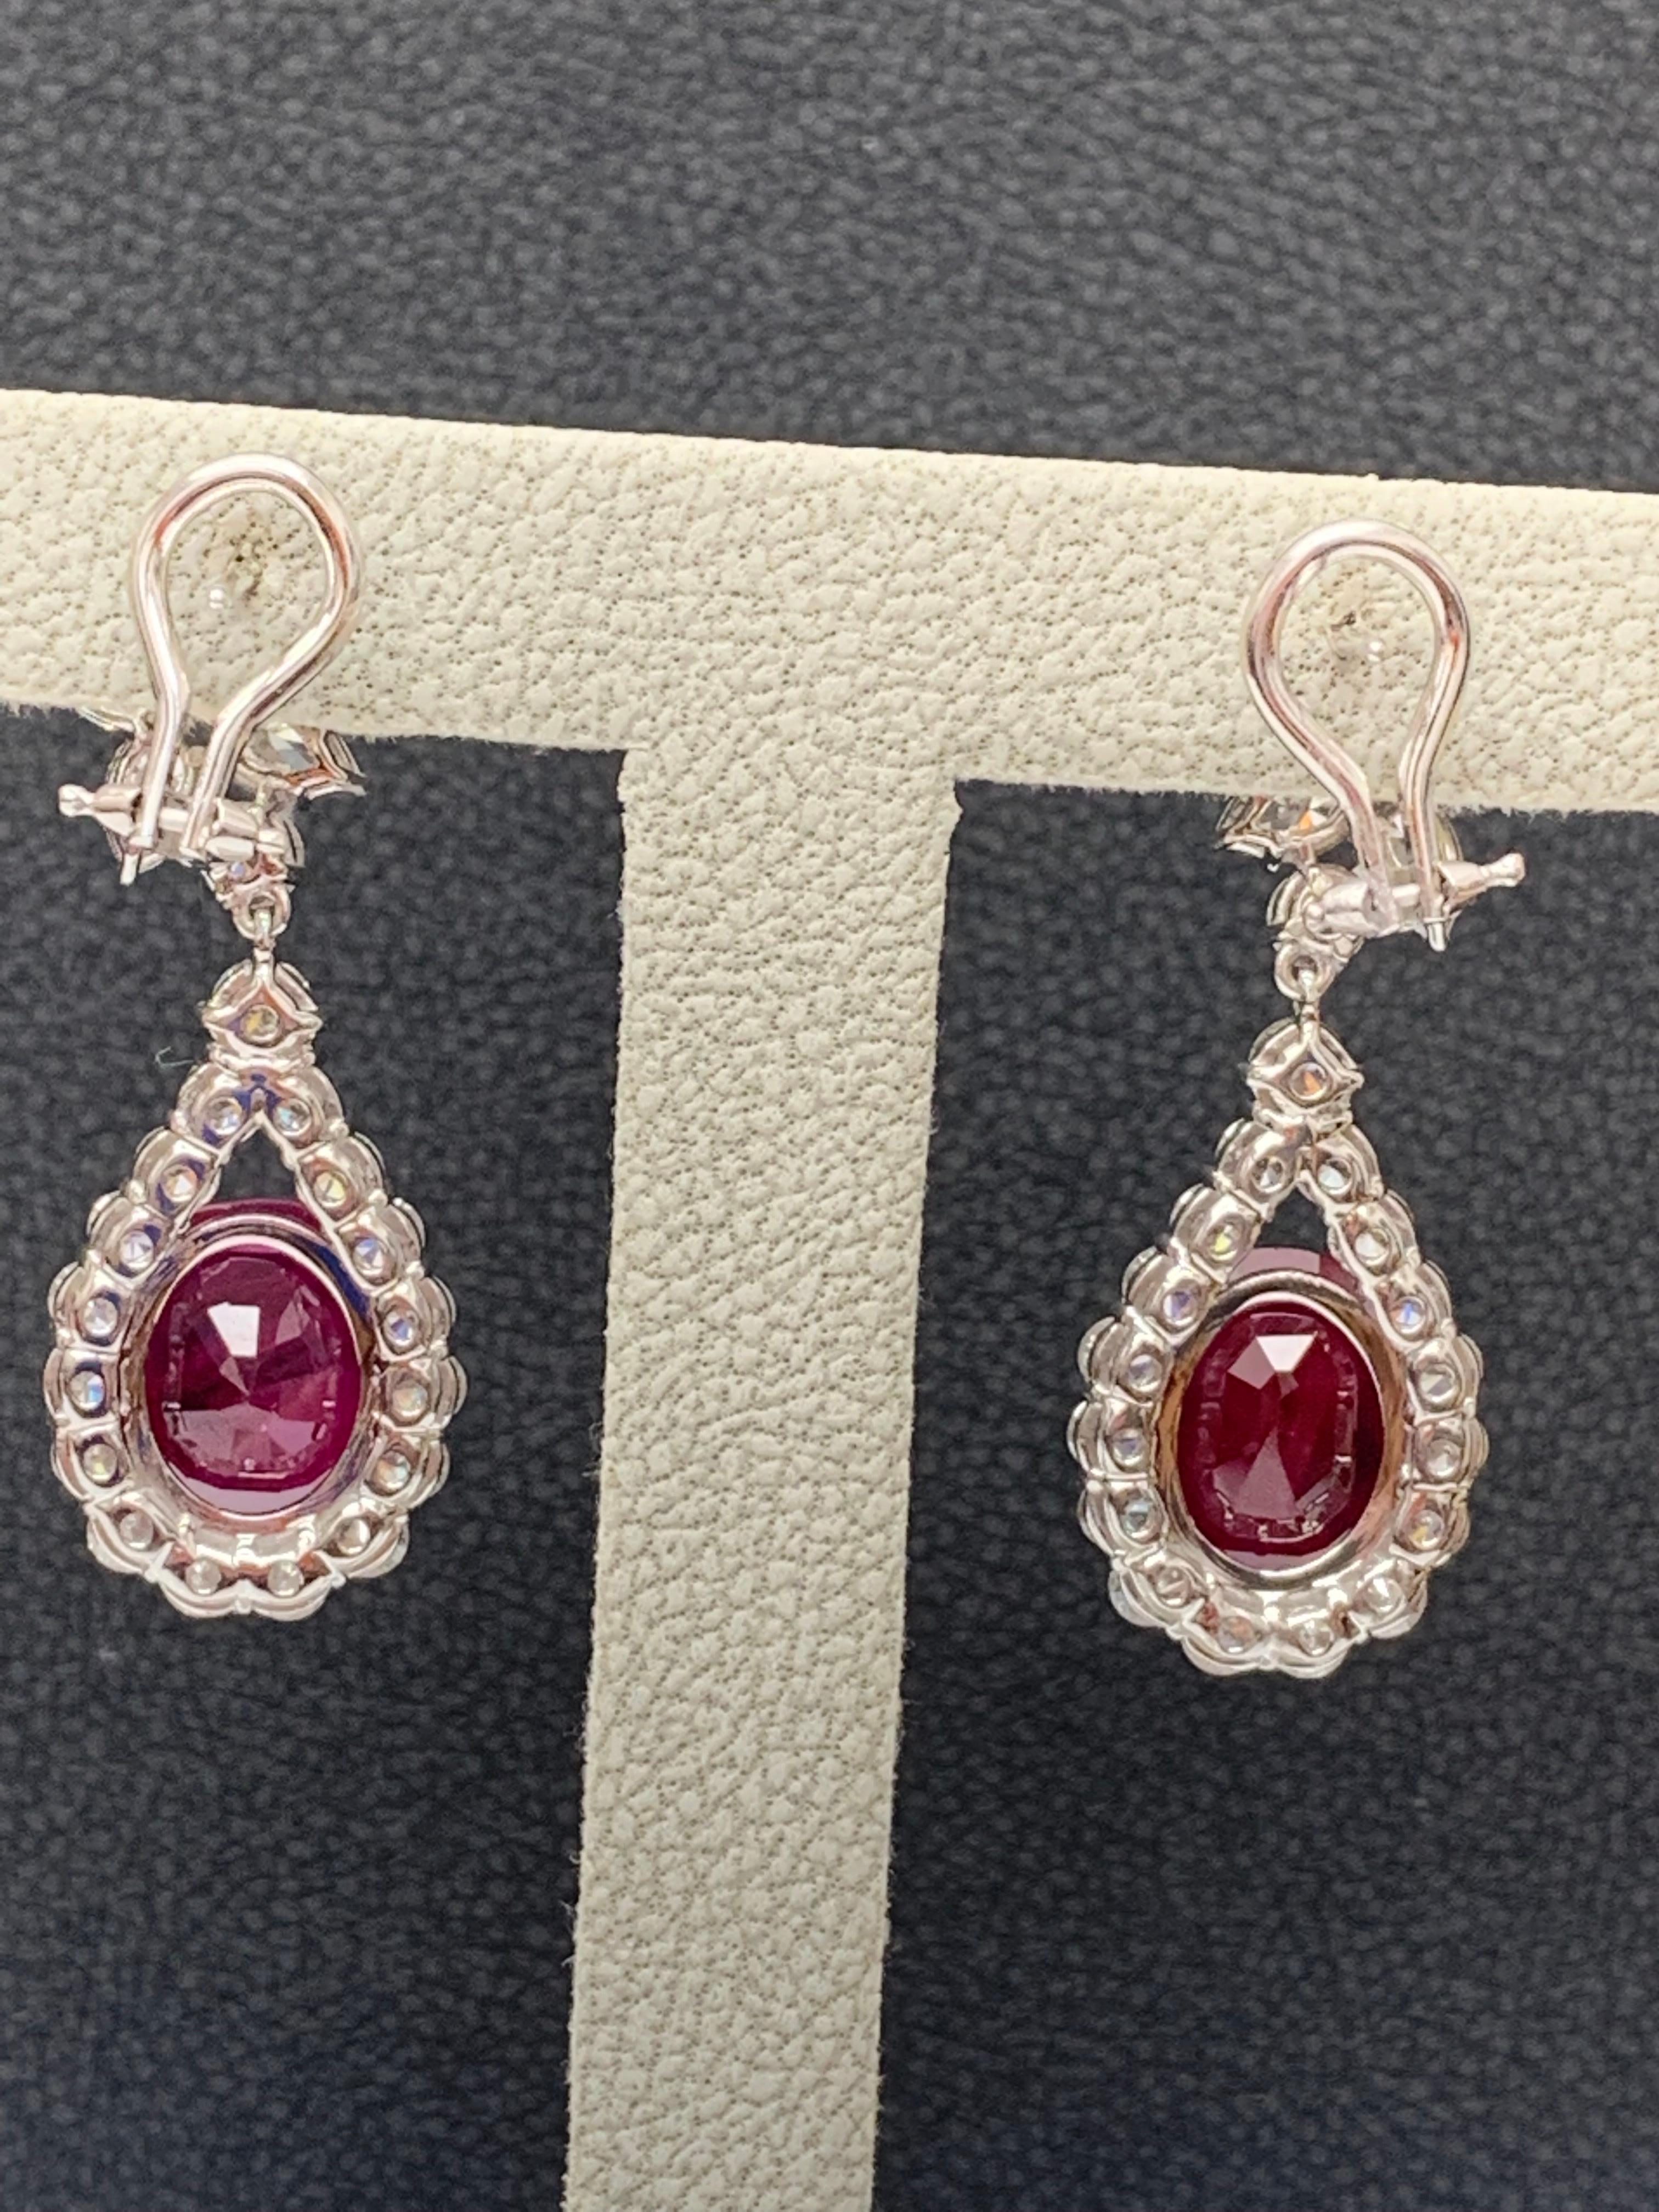 Certified 10.18 Carat Burma Ruby and Diamond Drop Earrings in 18K White Gold For Sale 2